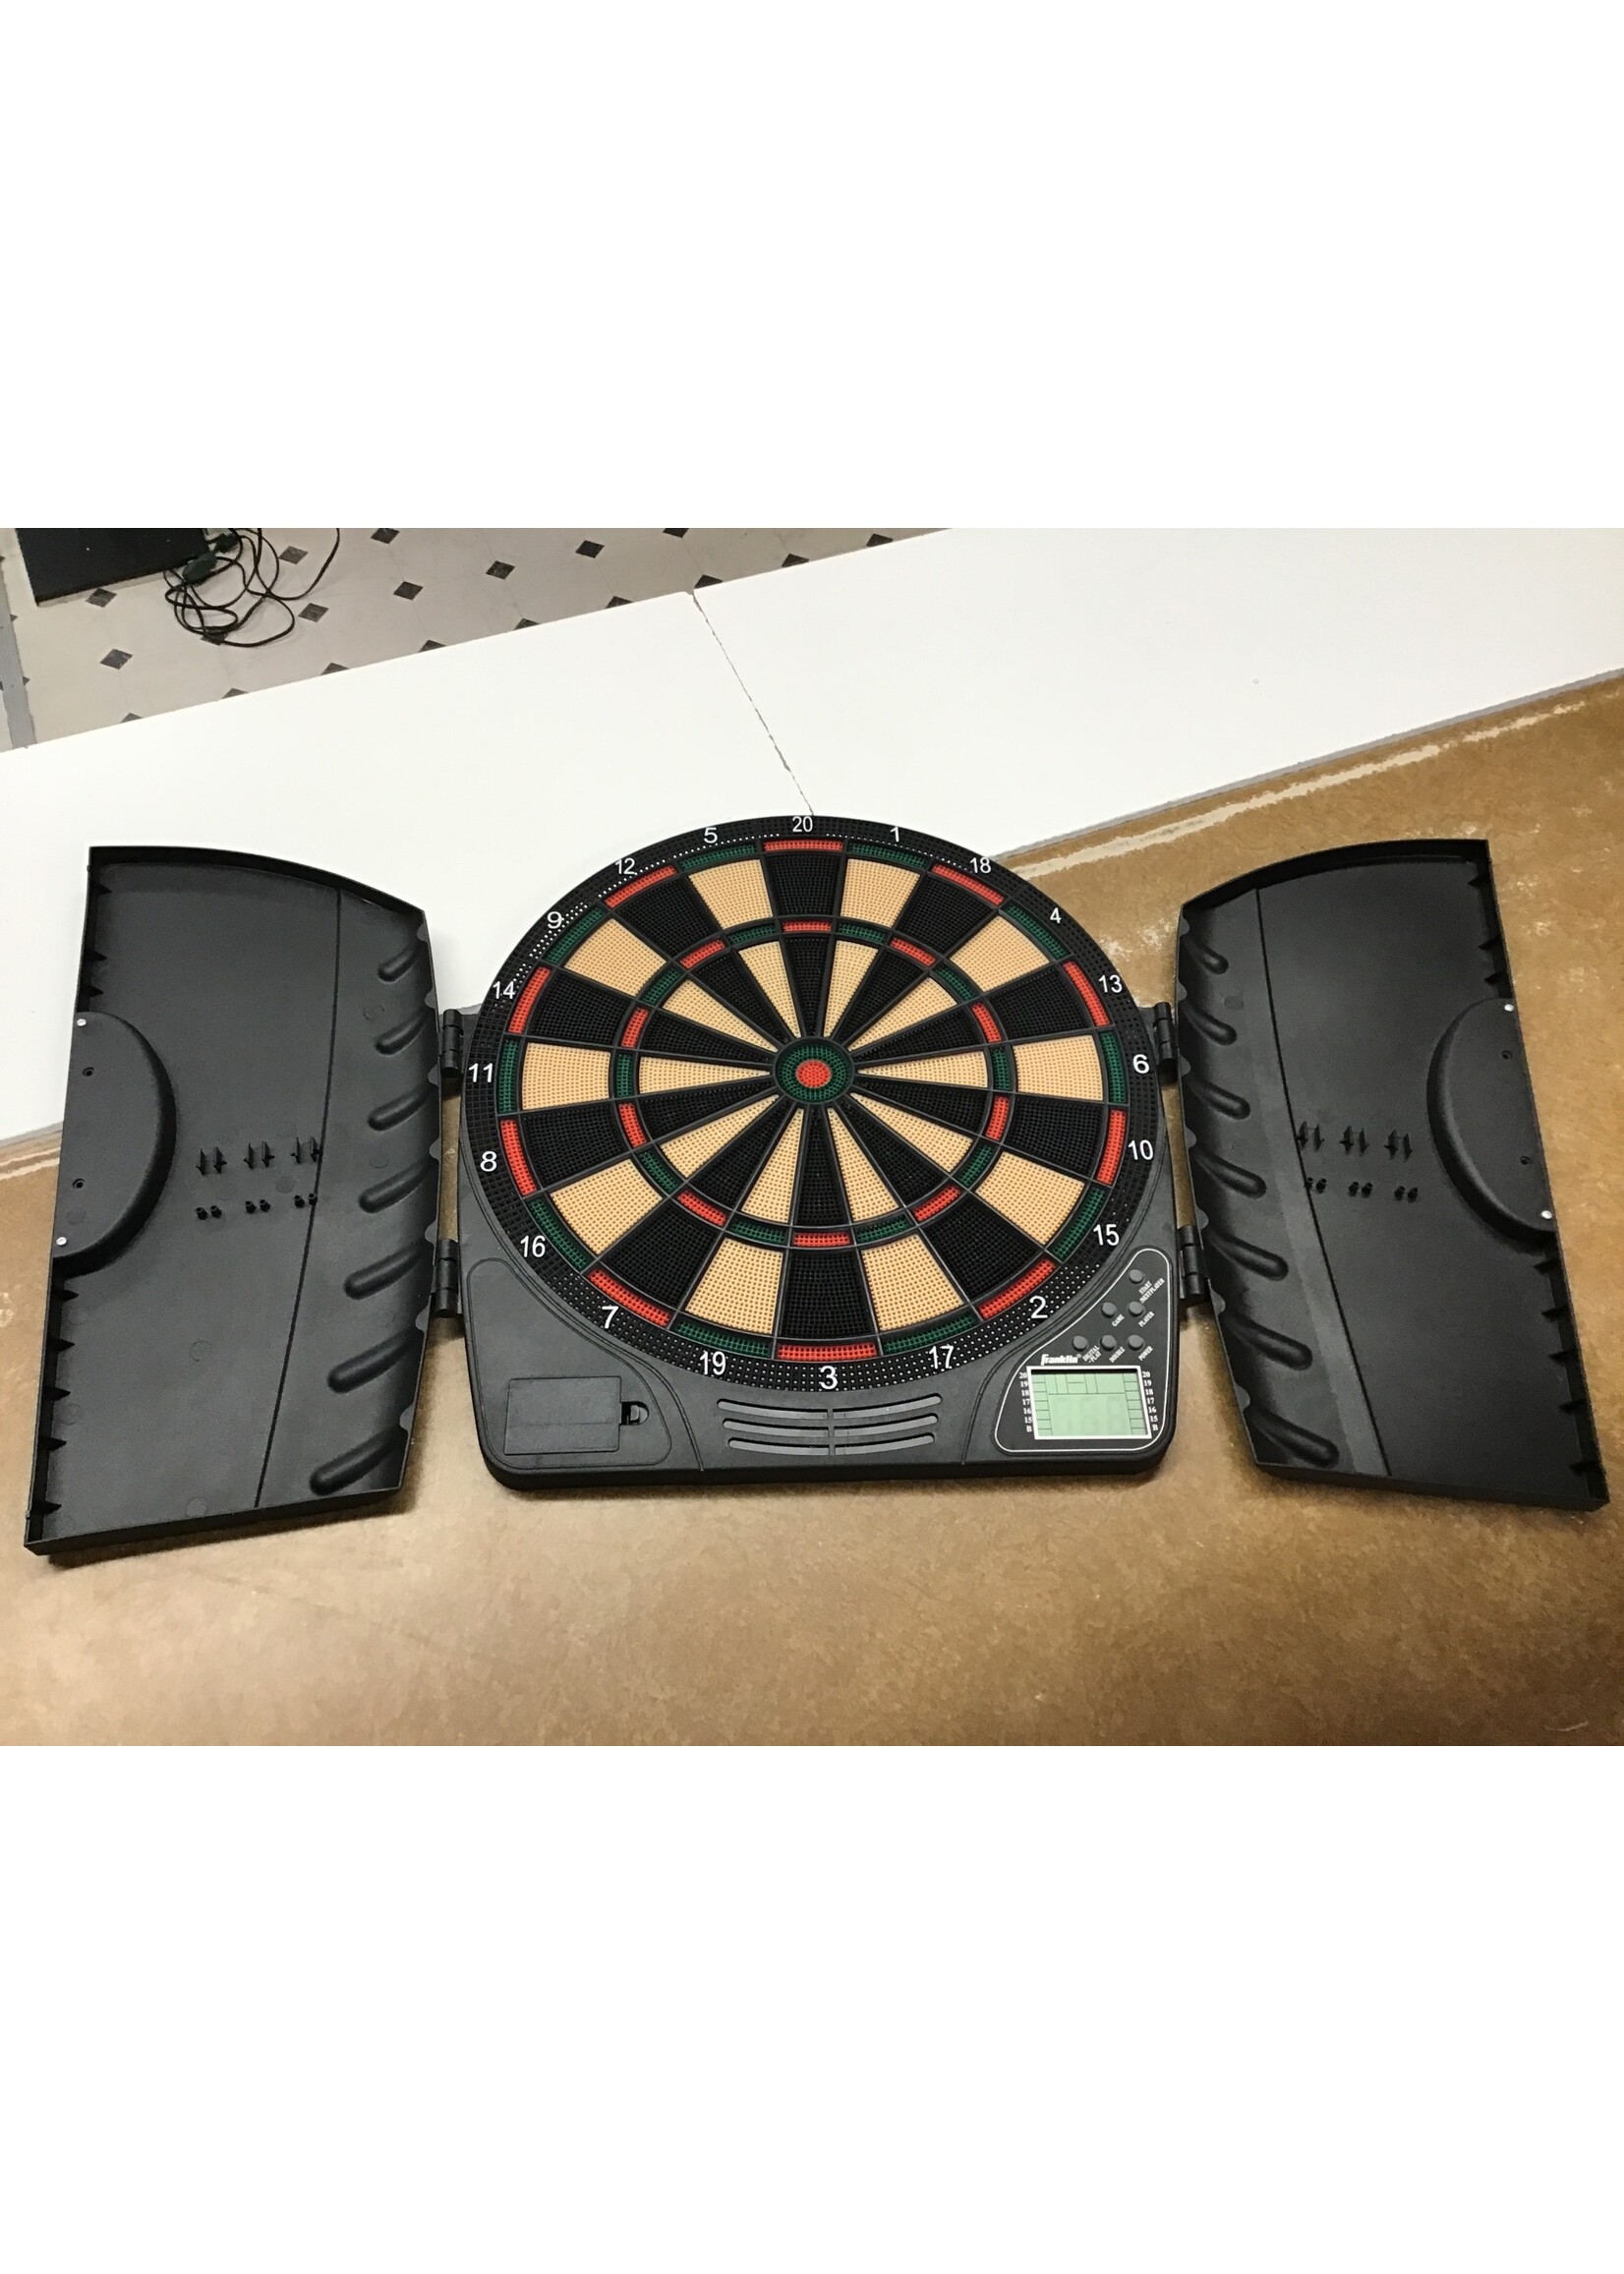 Franklin Sports Electronic Dart Board in black case *no darts